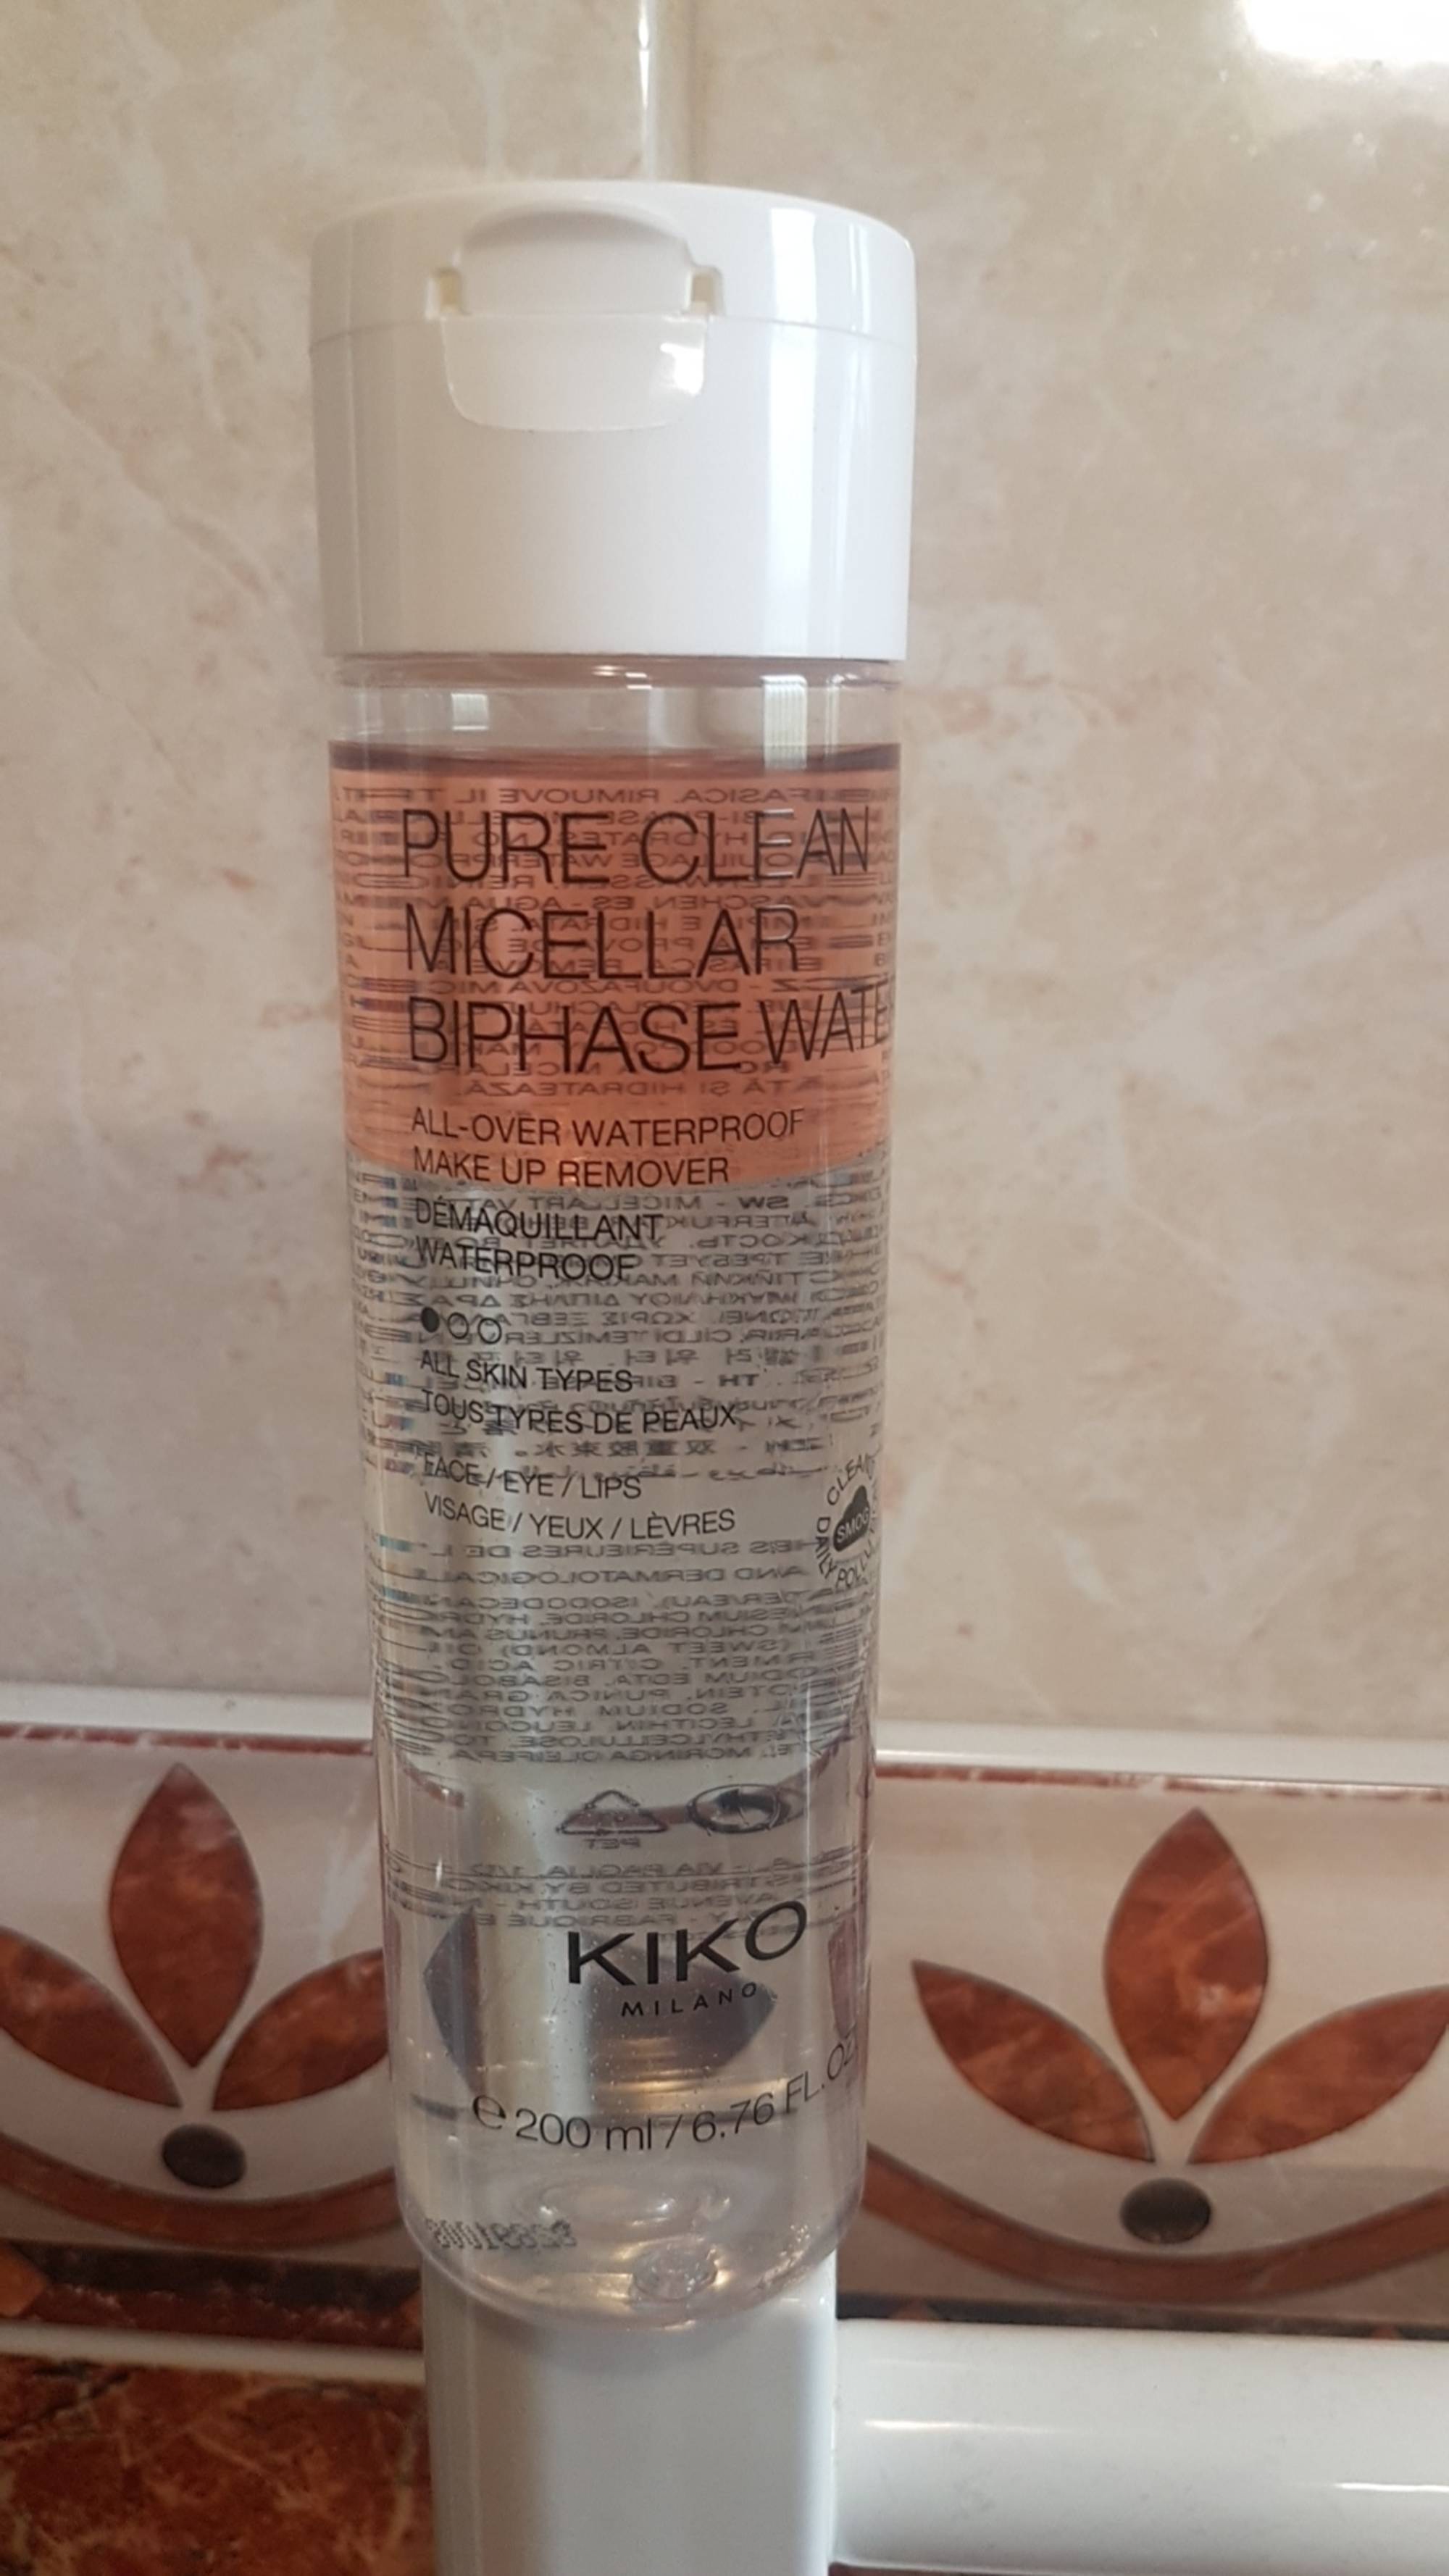 KIKO - Pure clean micellar biphase water - Démaquillant waterproof